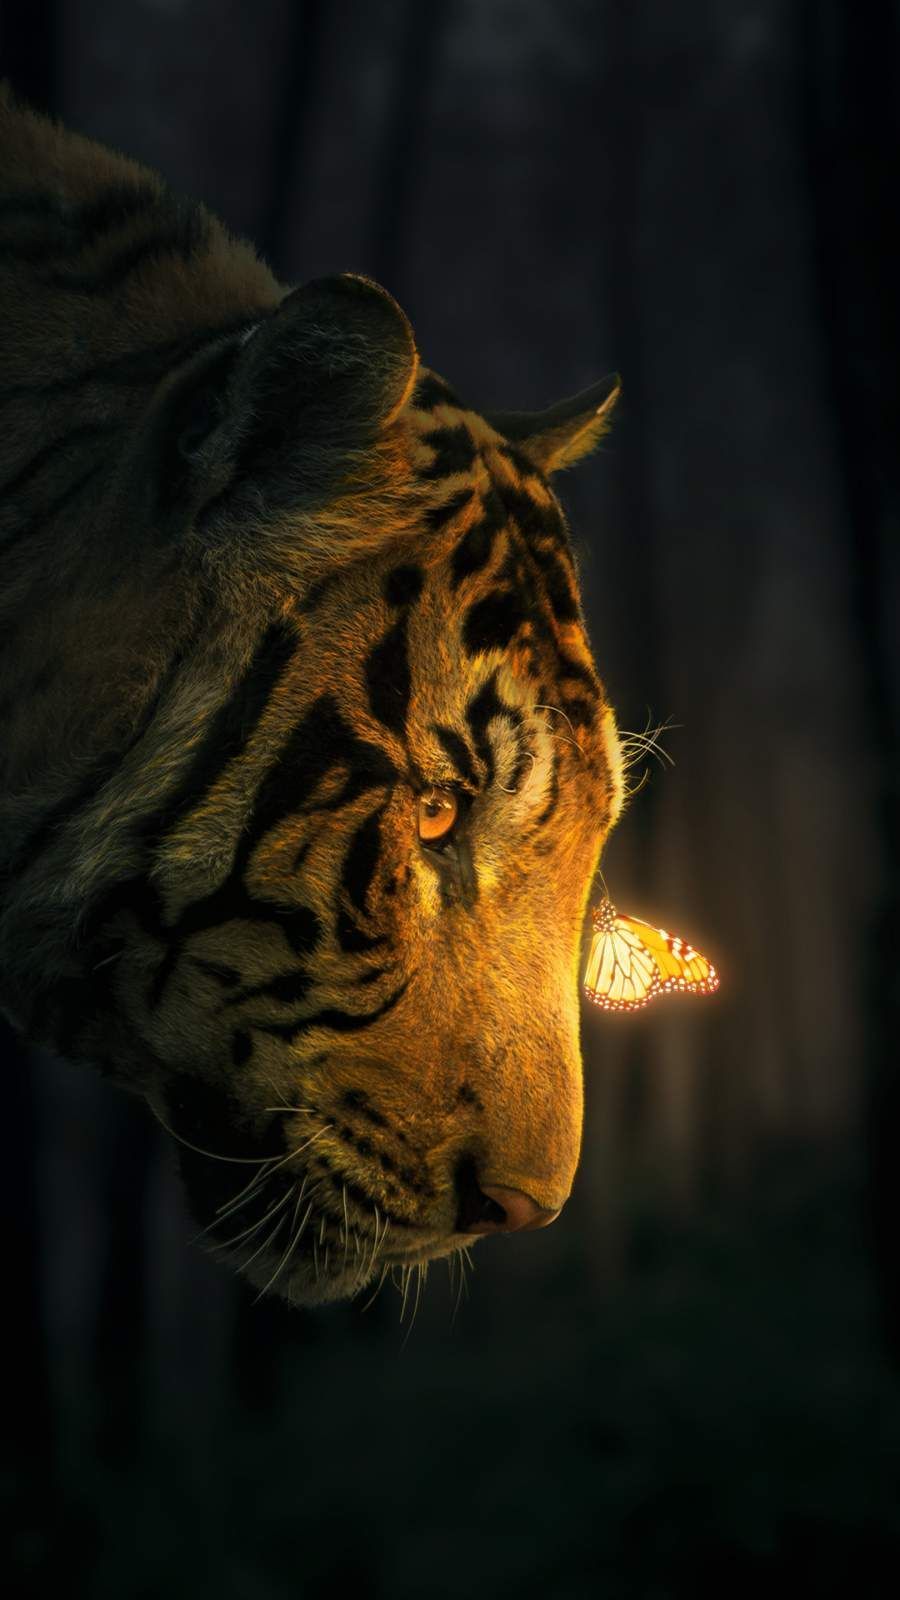 Glow in the Dark iPhone Wallpaper. Tiger wallpaper, Wild animal wallpaper, Tiger wallpaper iphone